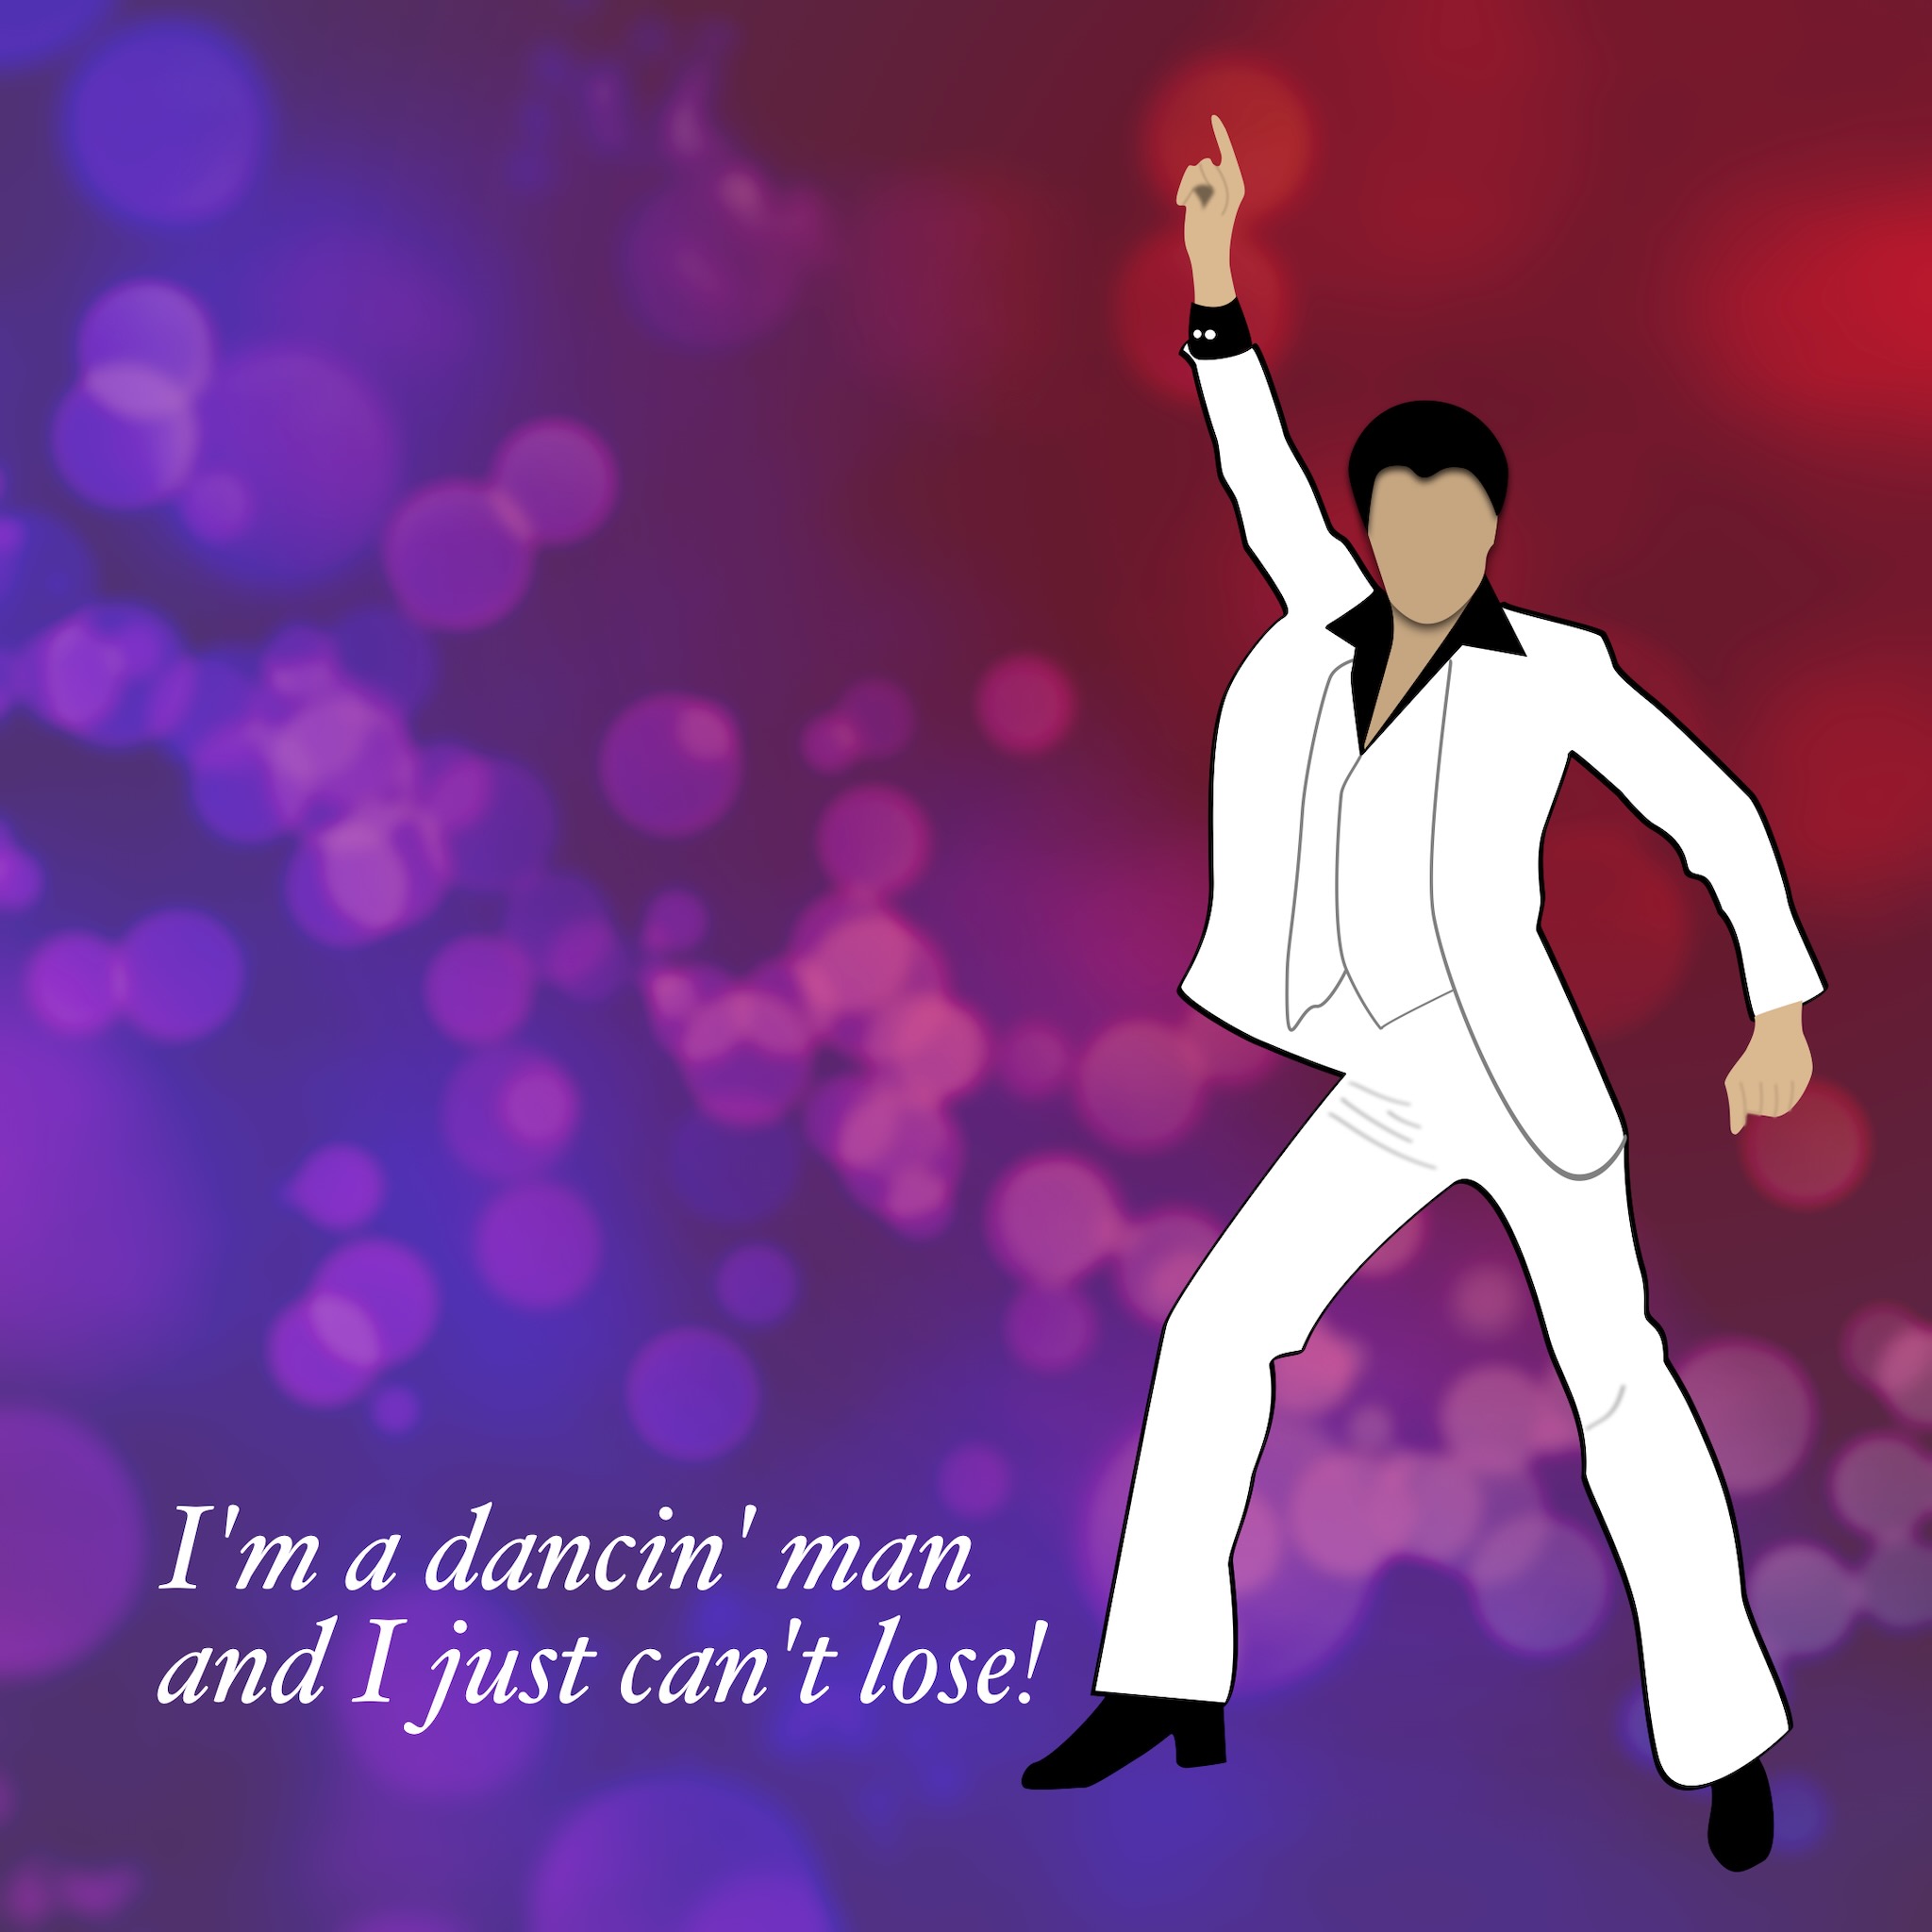 Disco illustration with John Travolta in classic Saturday Night Fever pose.